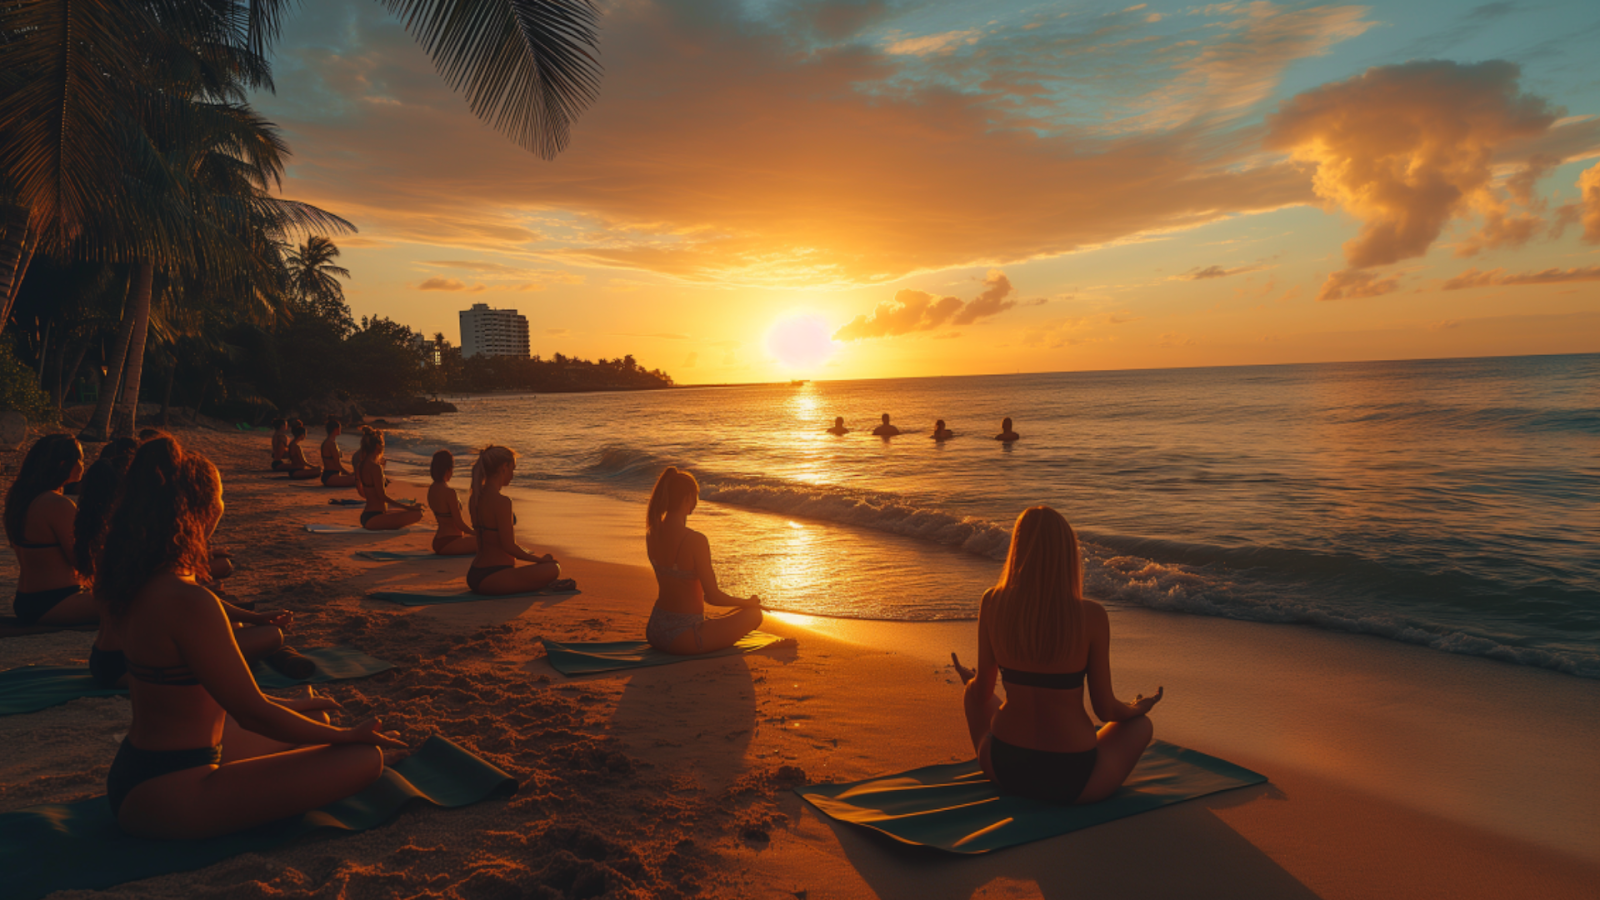 Morning yoga session on a beach in Playa del Carmen at sunrise.